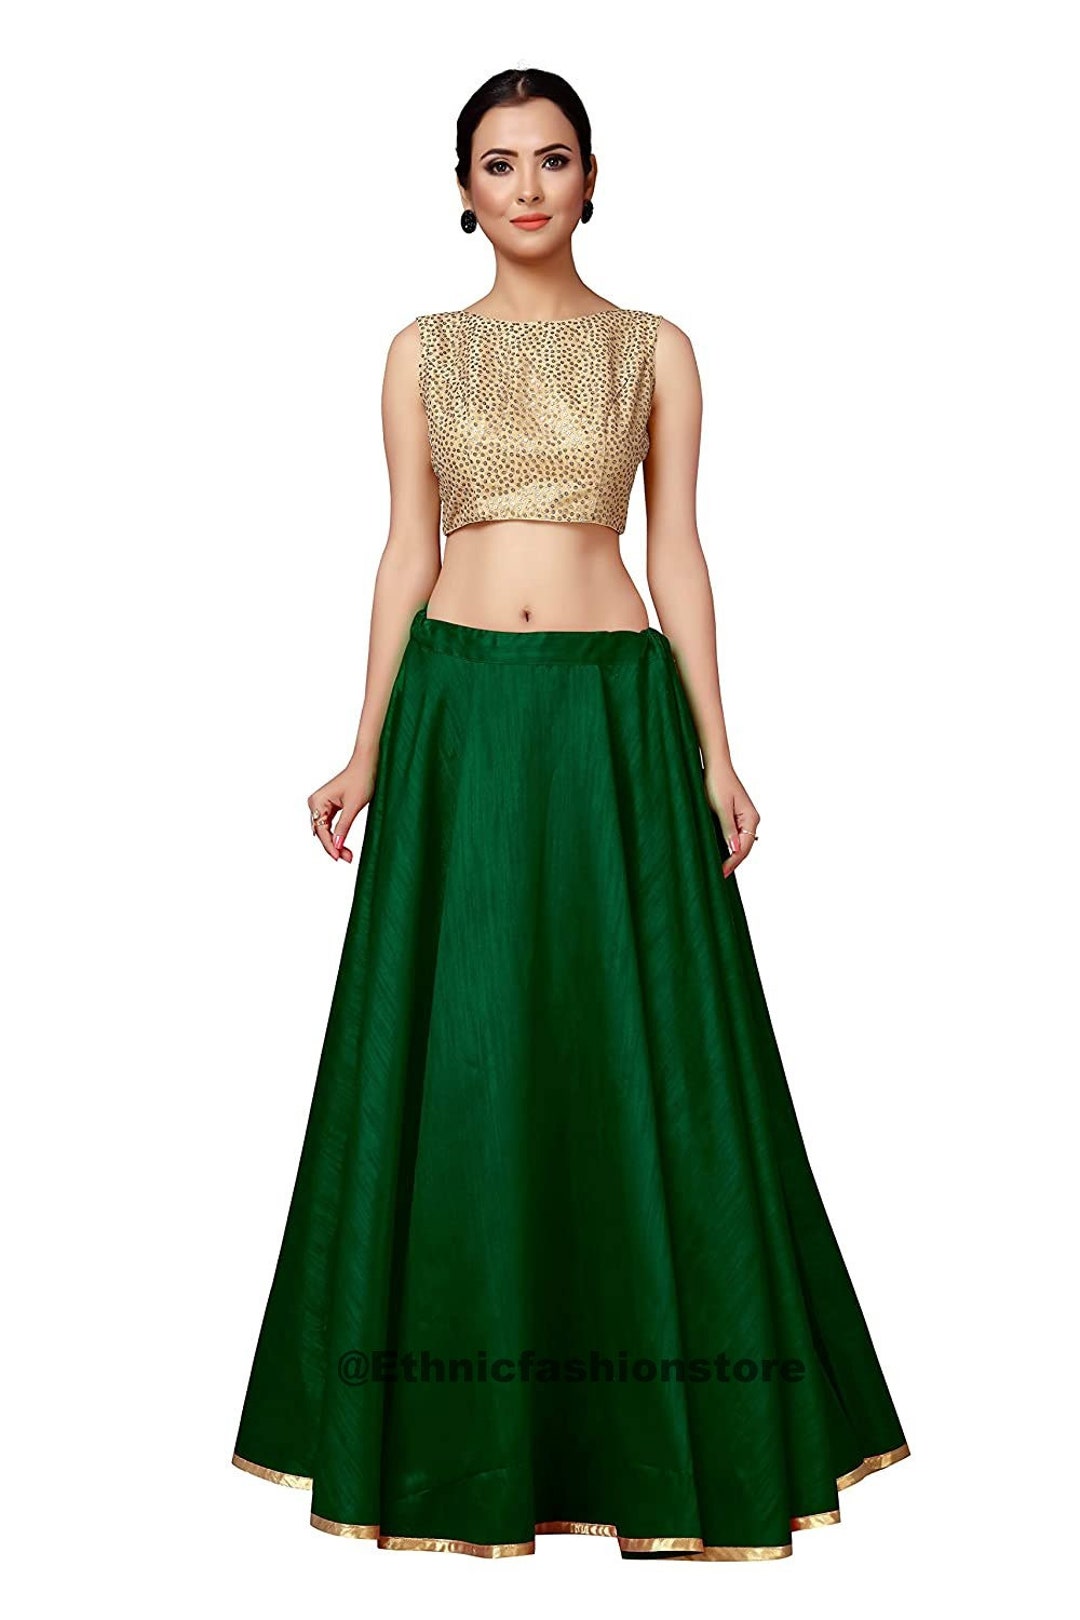 Classic Indian Skirt Set - Green at Rs 3400.00 | West Mambalam |  Koothanallur| ID: 24596883330